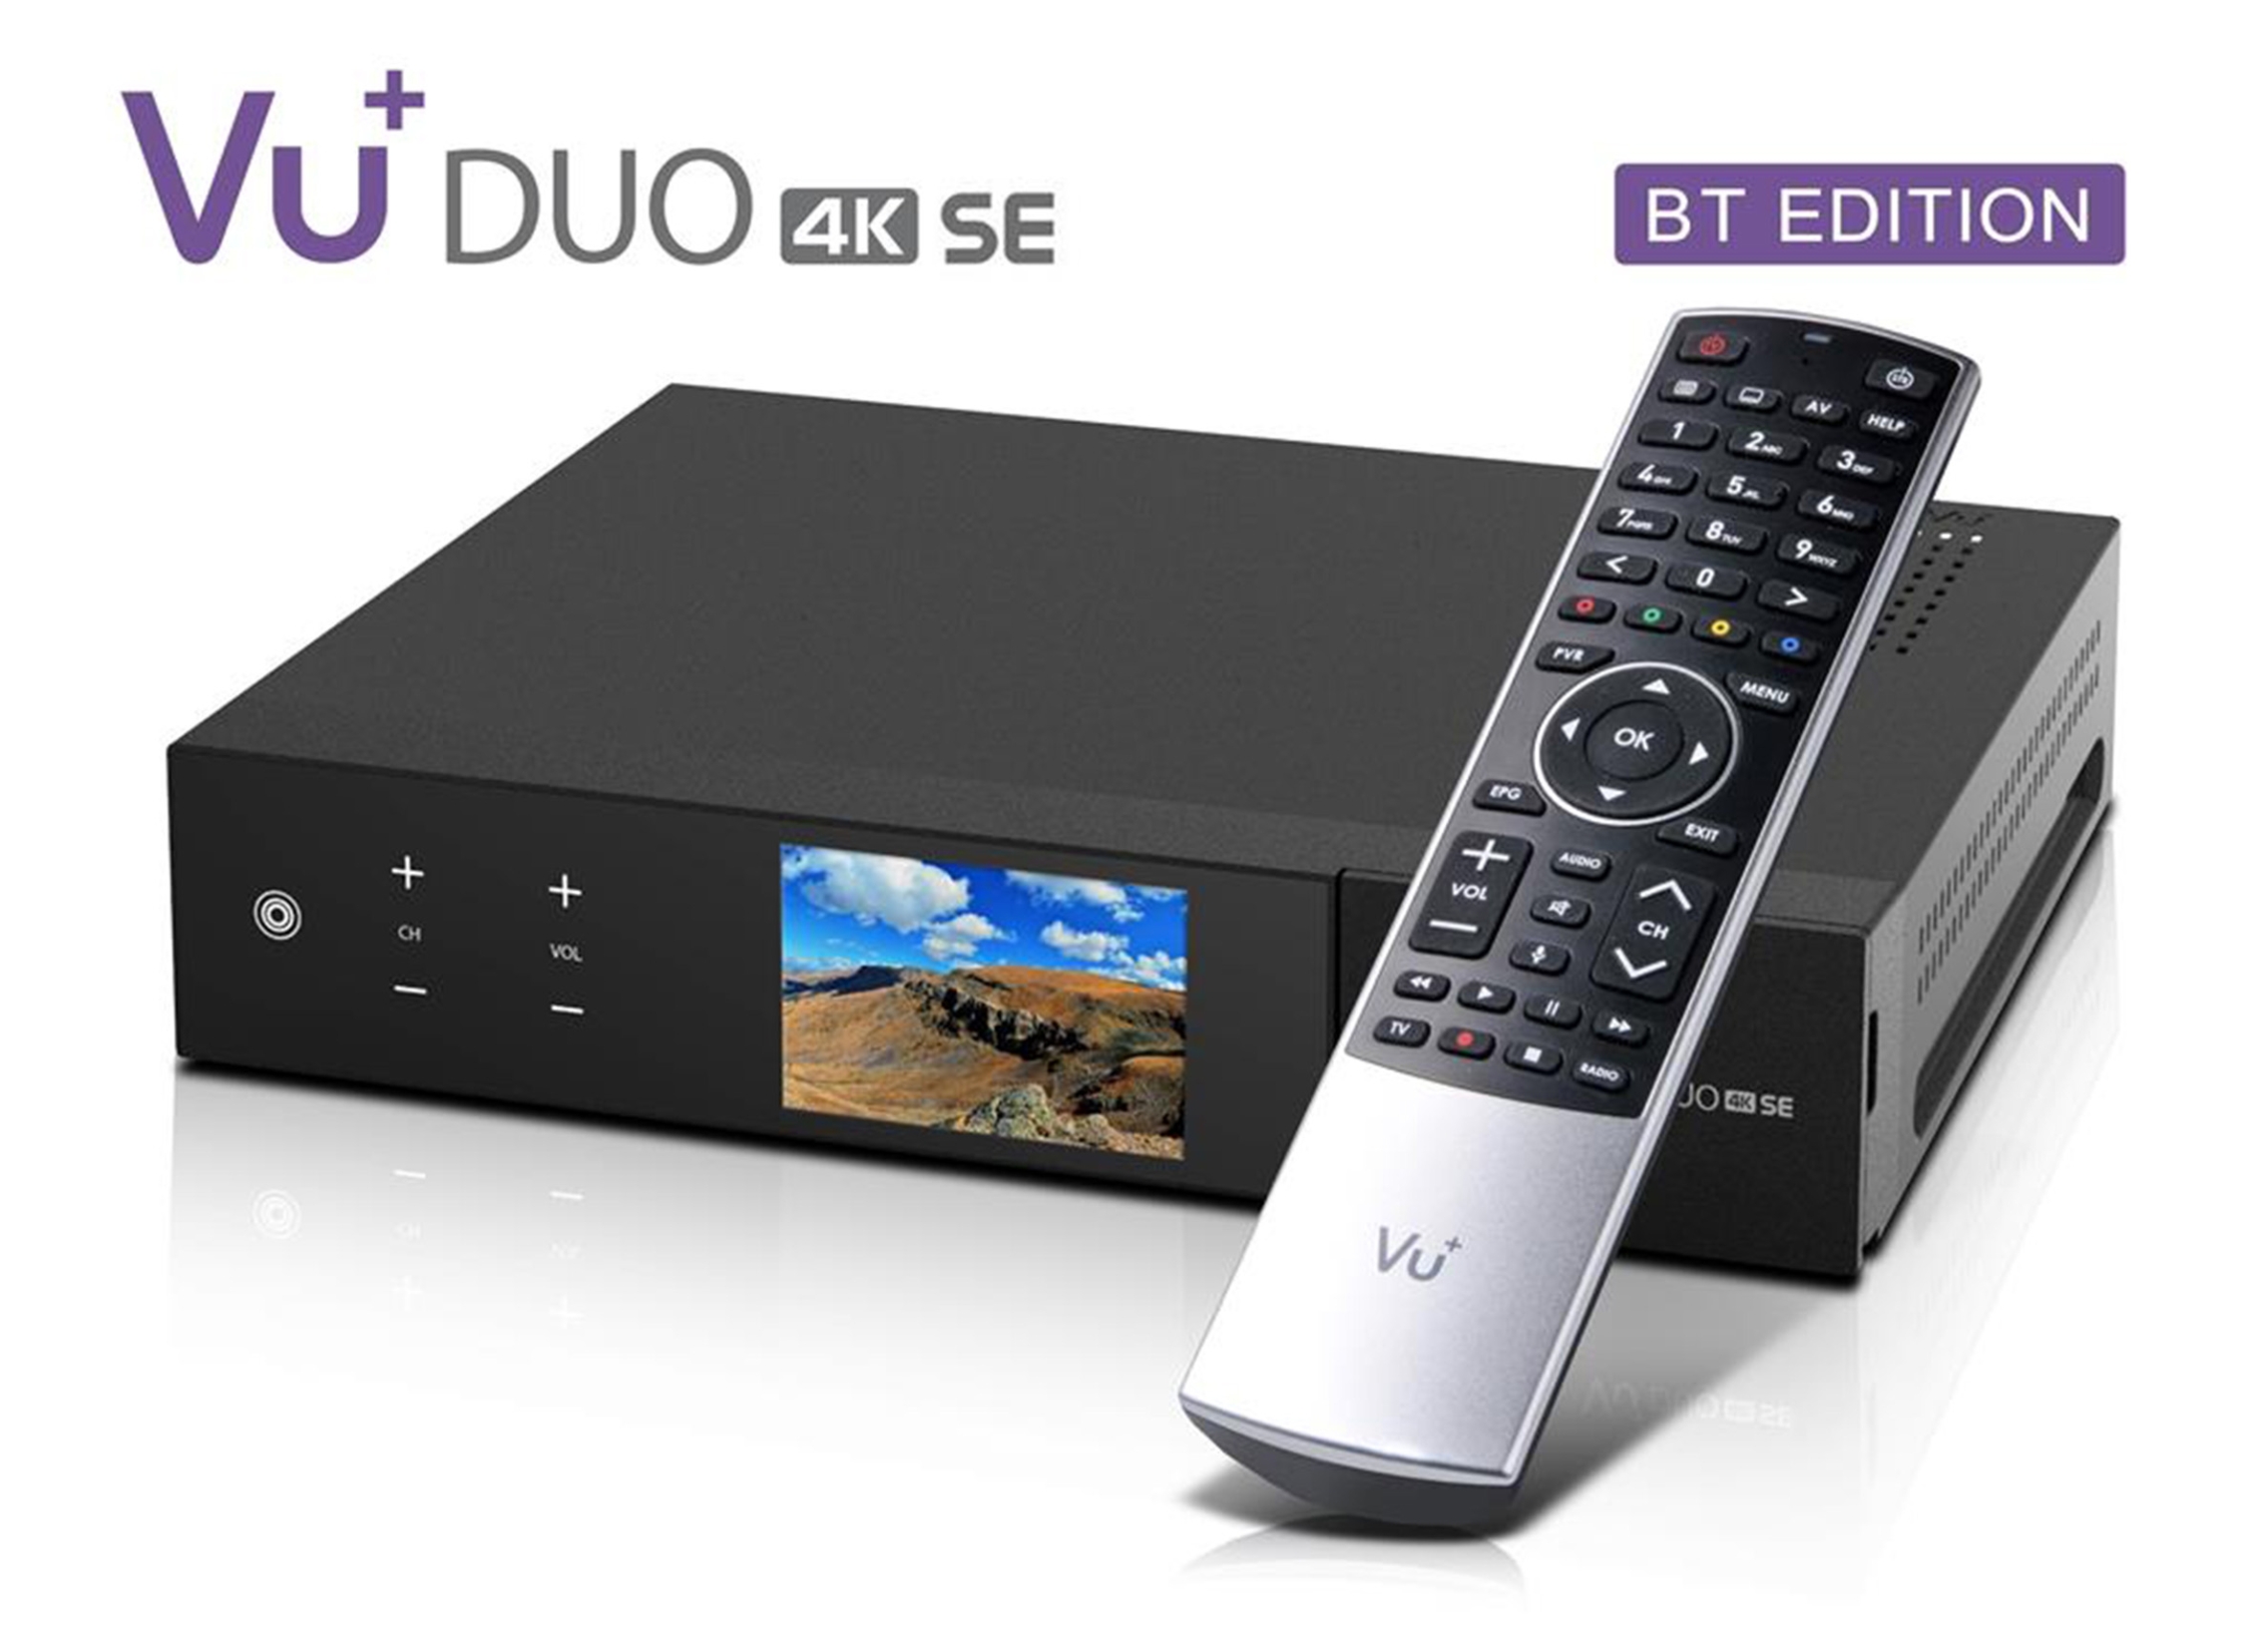 VU+ Duo 4K SE BT 1xDVB-T2 DUAL Linux Receiver